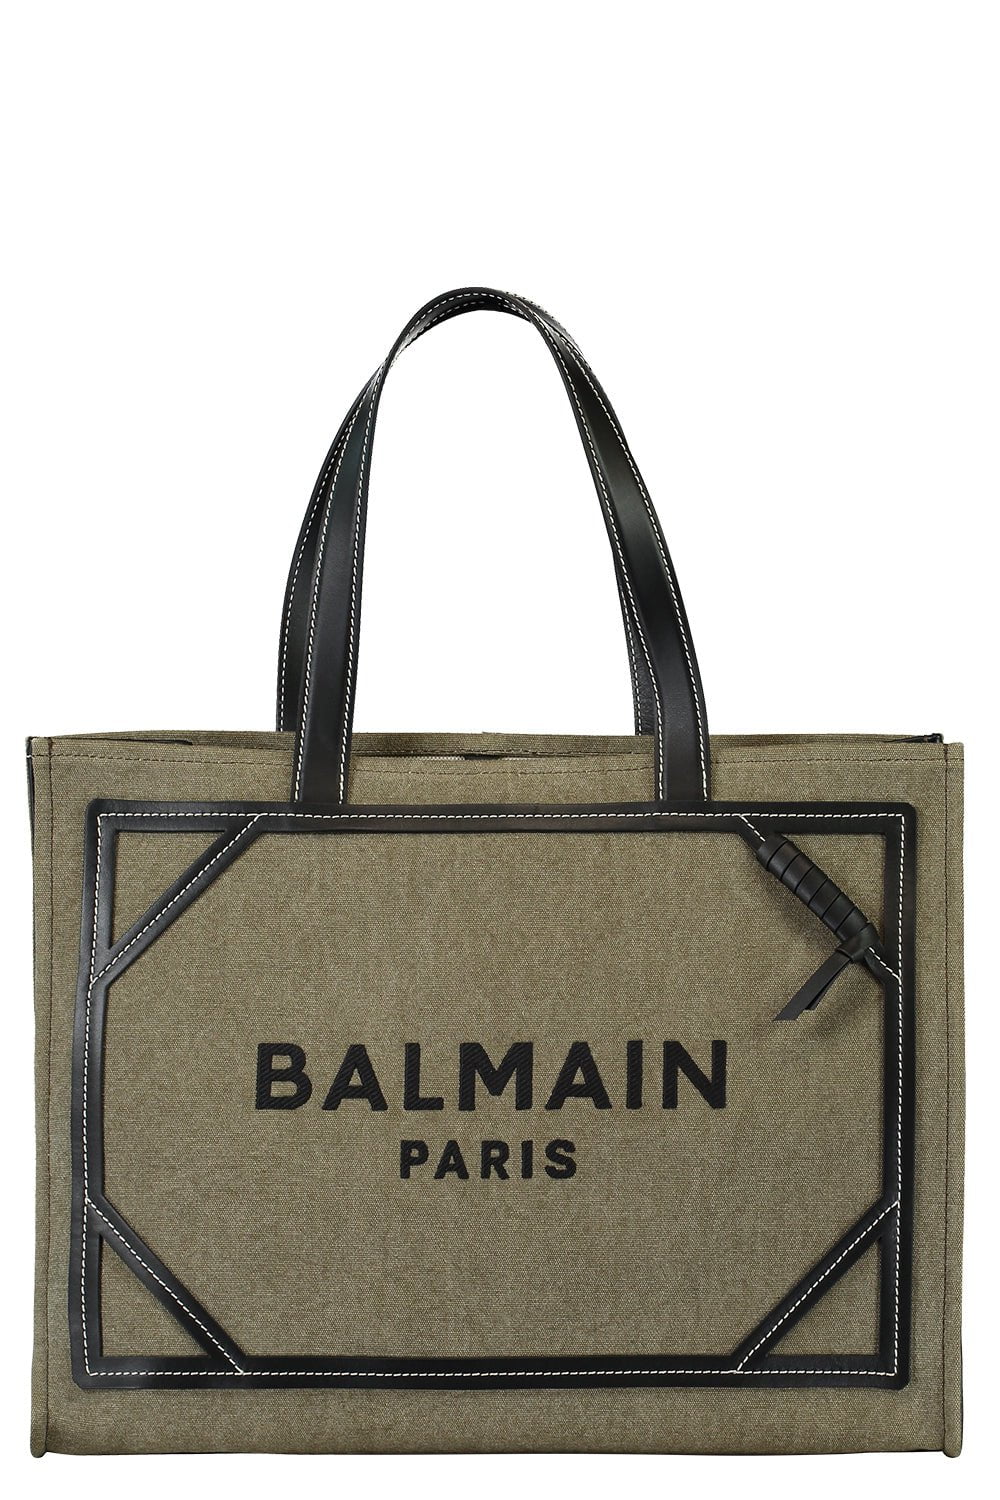 BALMAIN-B-Army Shopper Medium Tote Bag-KHAKI/NOIR